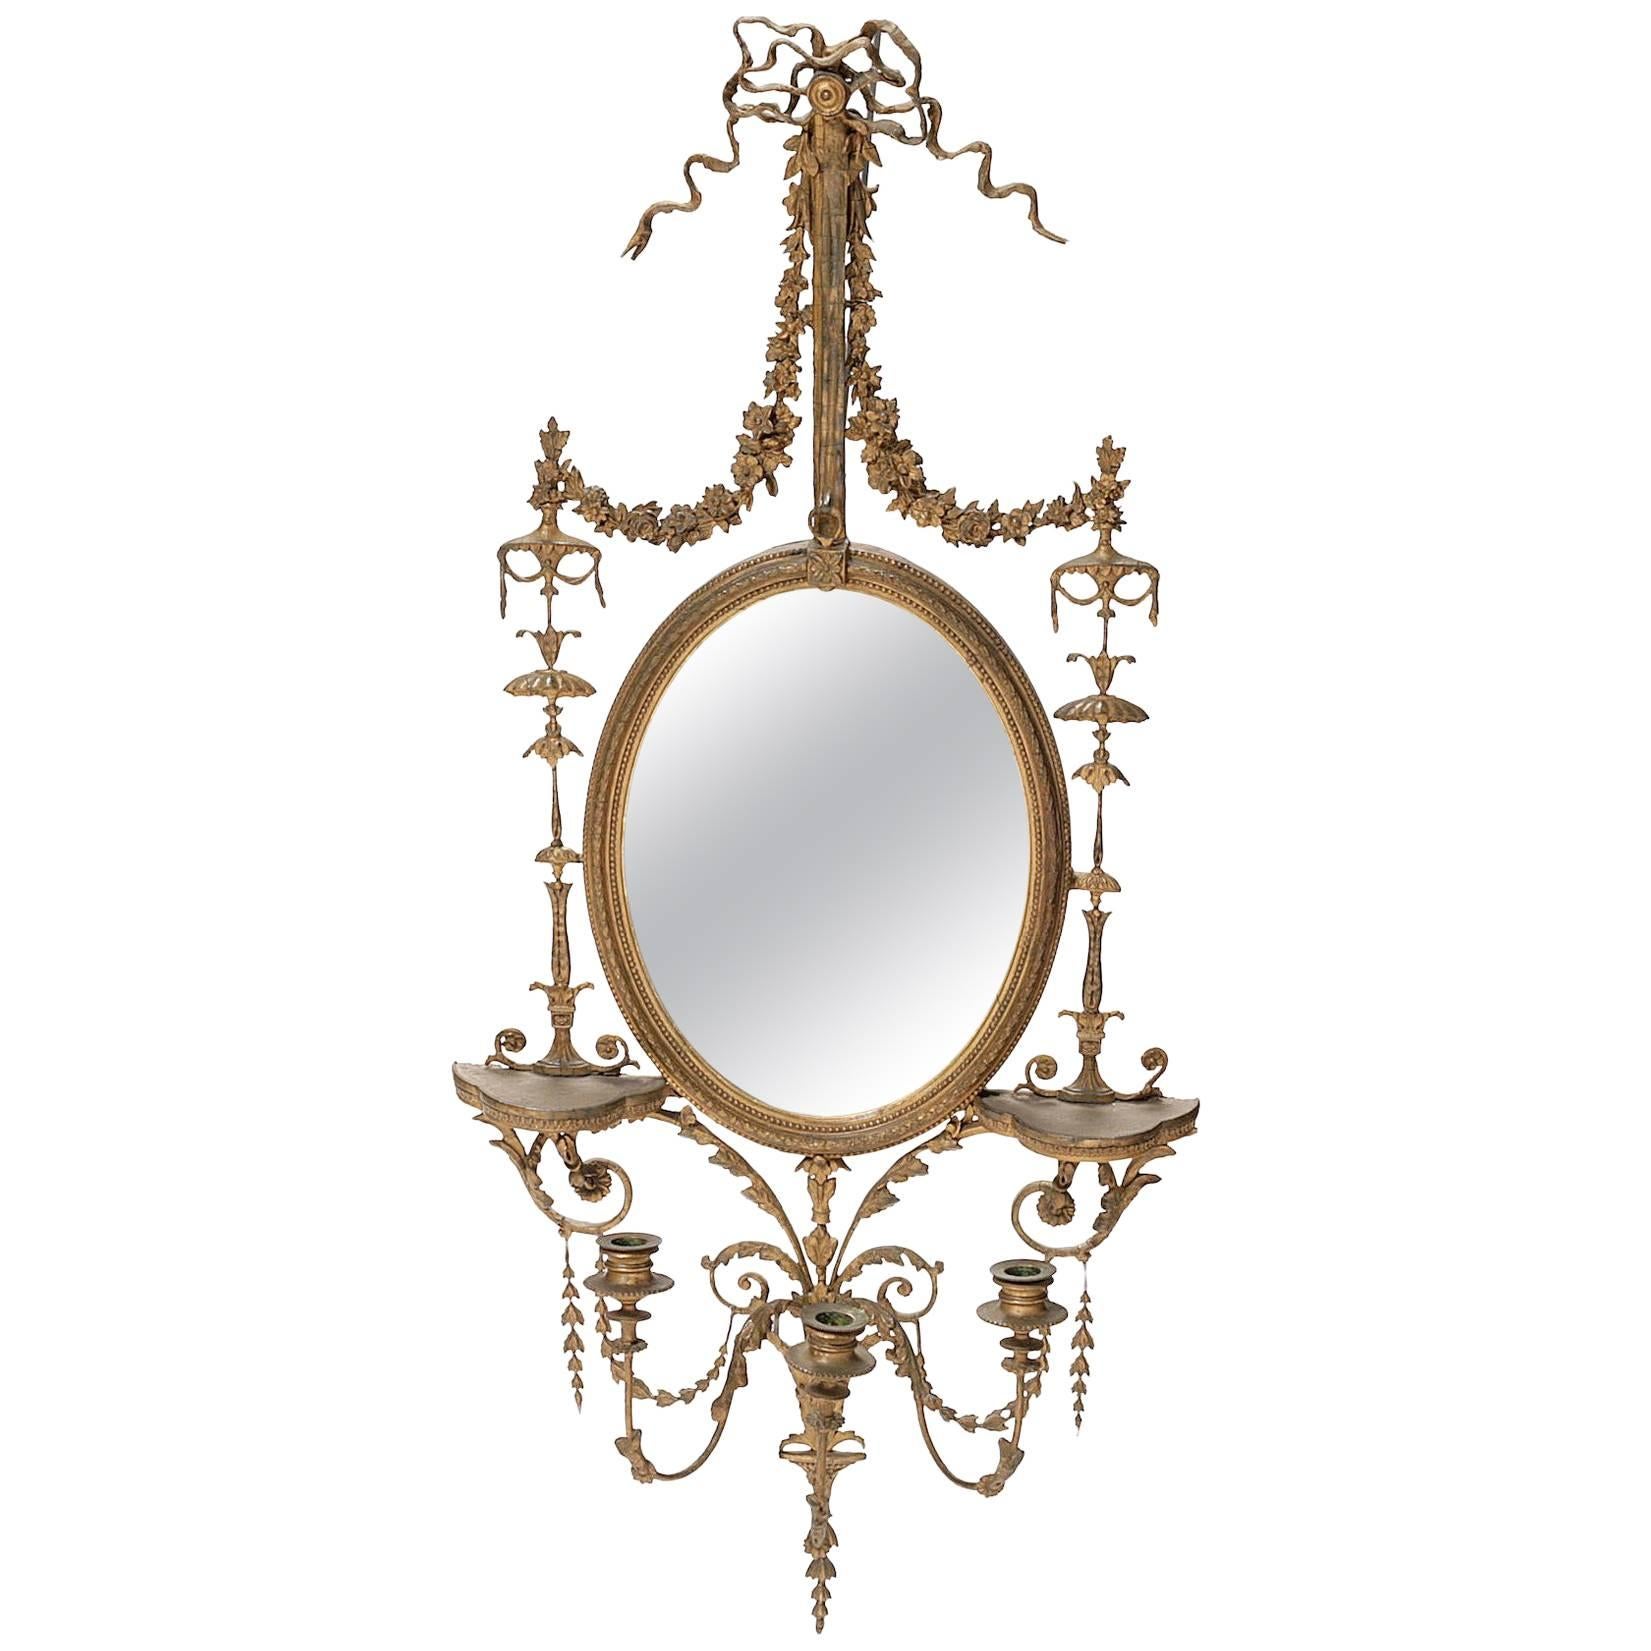 English Adams Style Gilt and Detailed Girandole Mirror